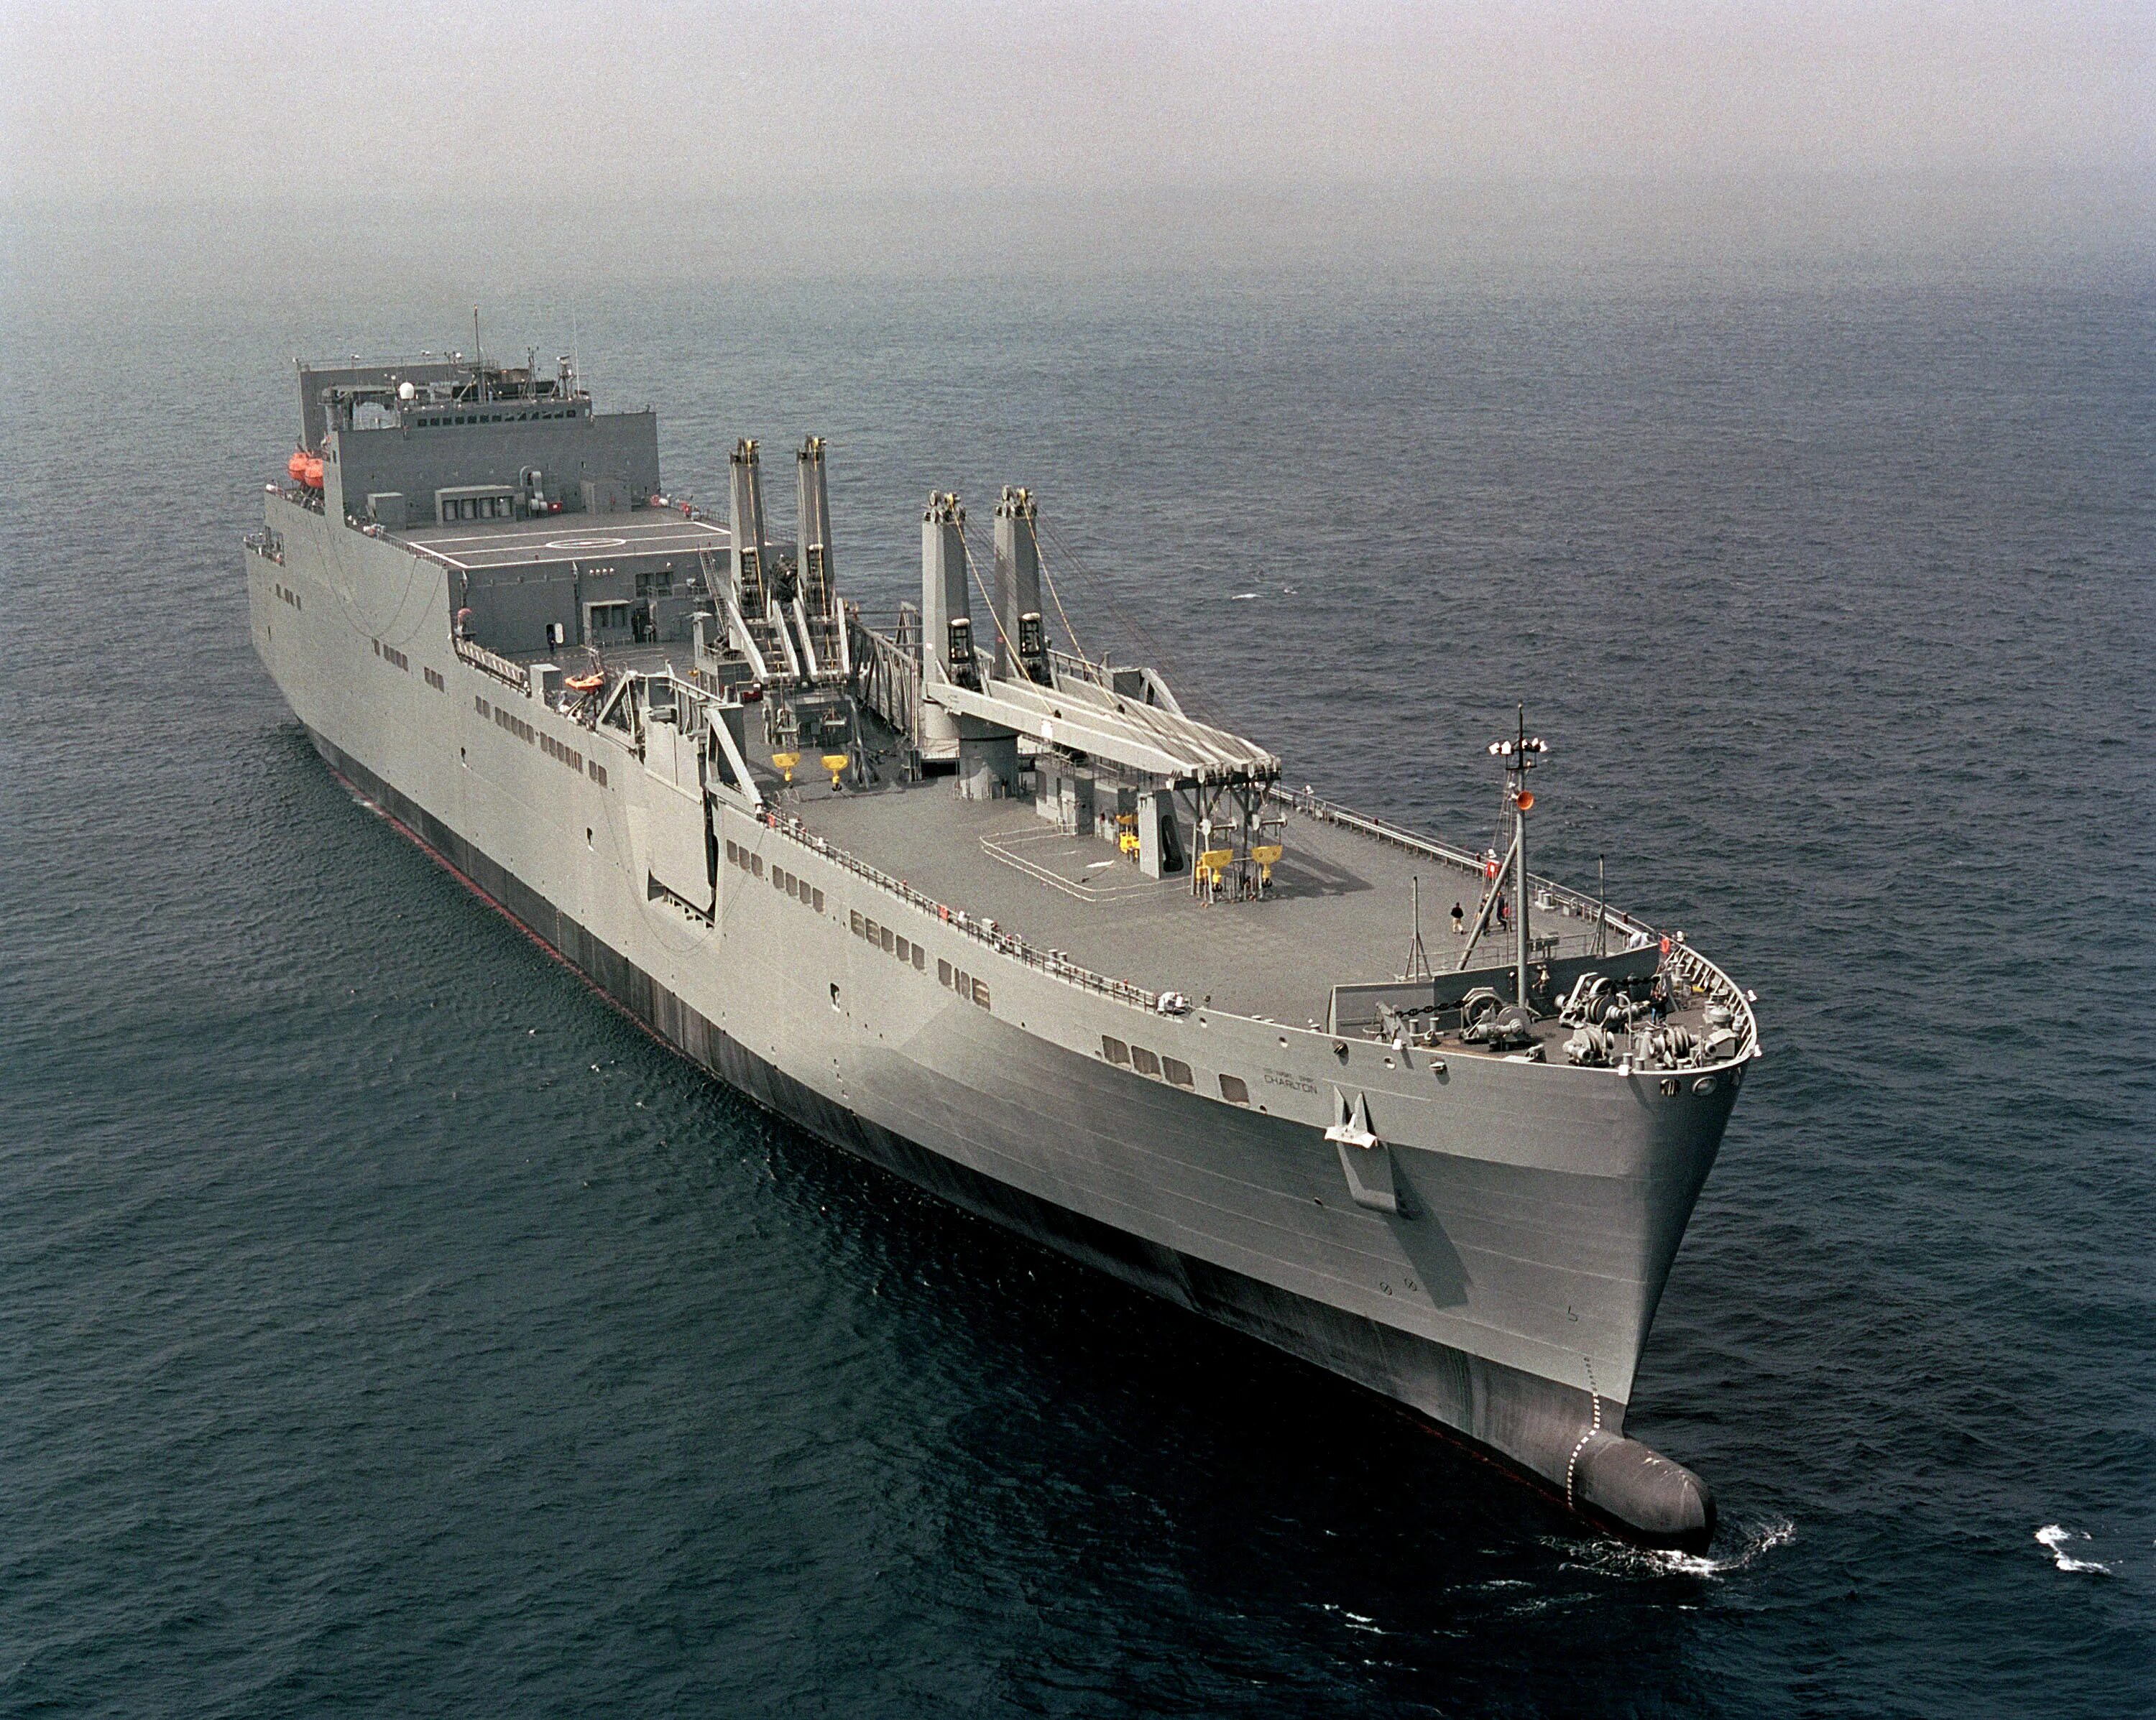 Usa ships. USNS Watson (t-AKR-310). USNS (T-AG-4947). USNS (T-ao 204). USNS Watson корабль.